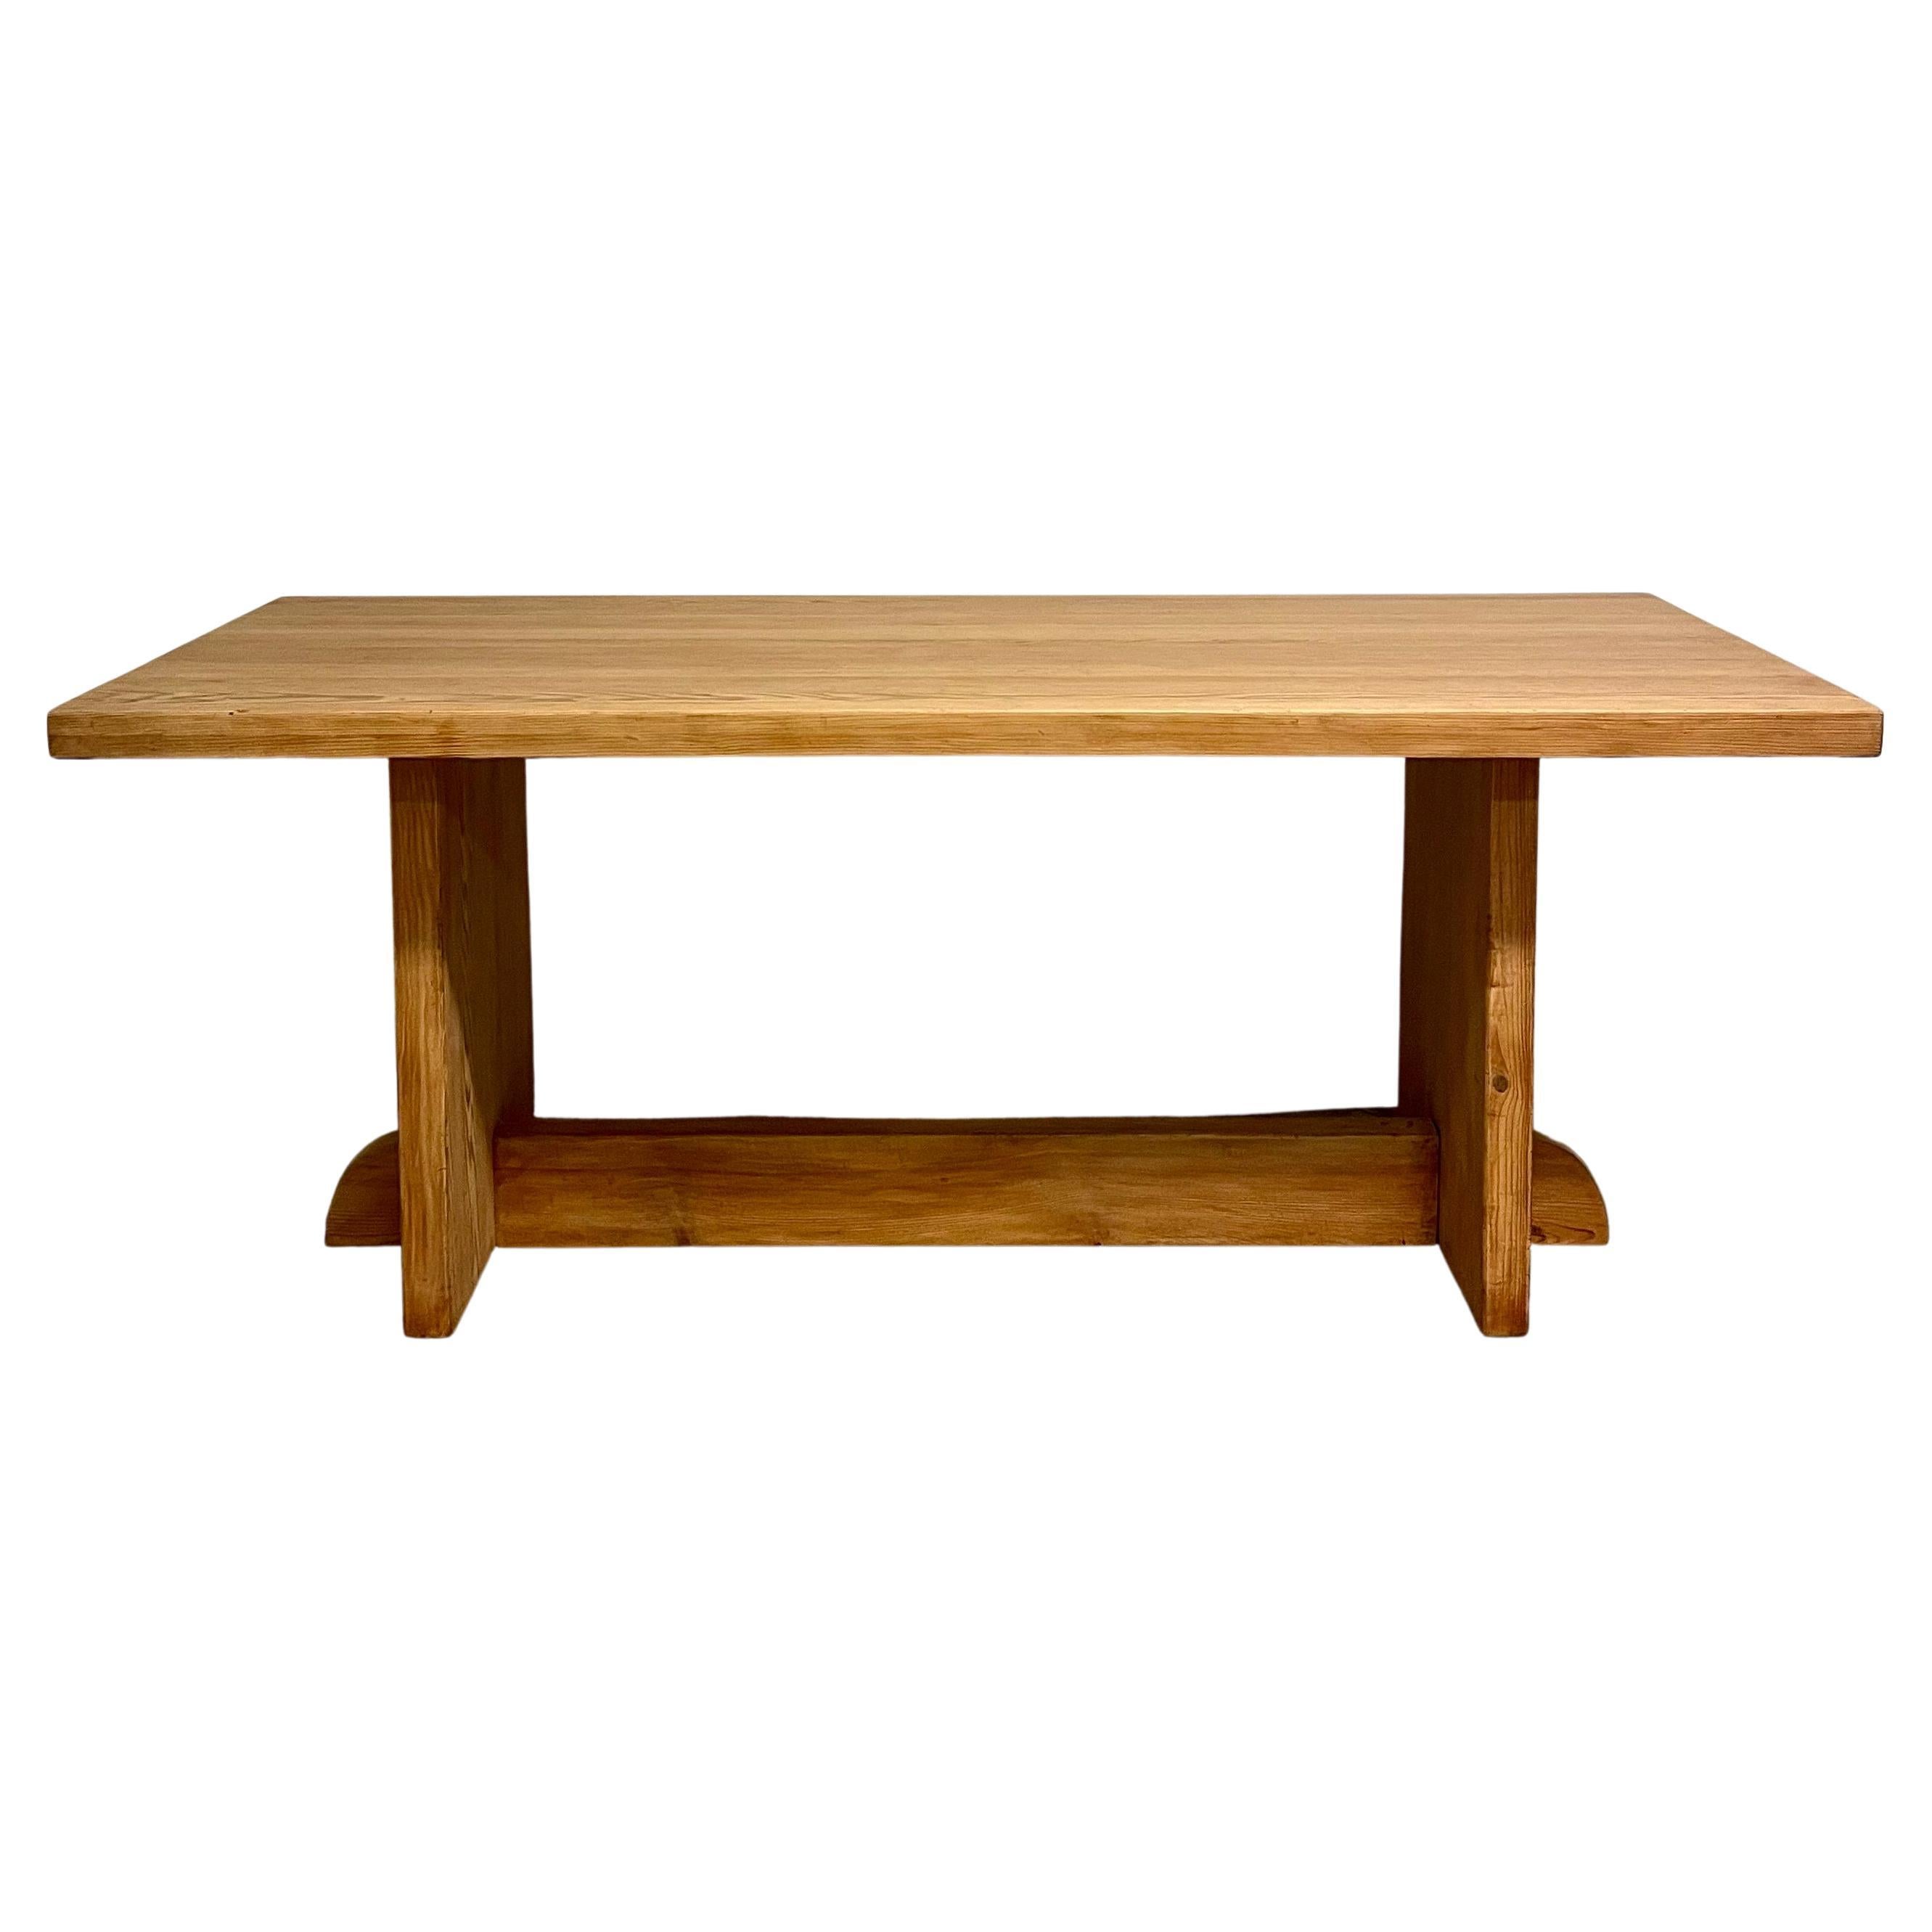 Axel Einar Hjorth "Lovö" Table Desk Produced by Nordiska Kompaniet, Sweden 1930s